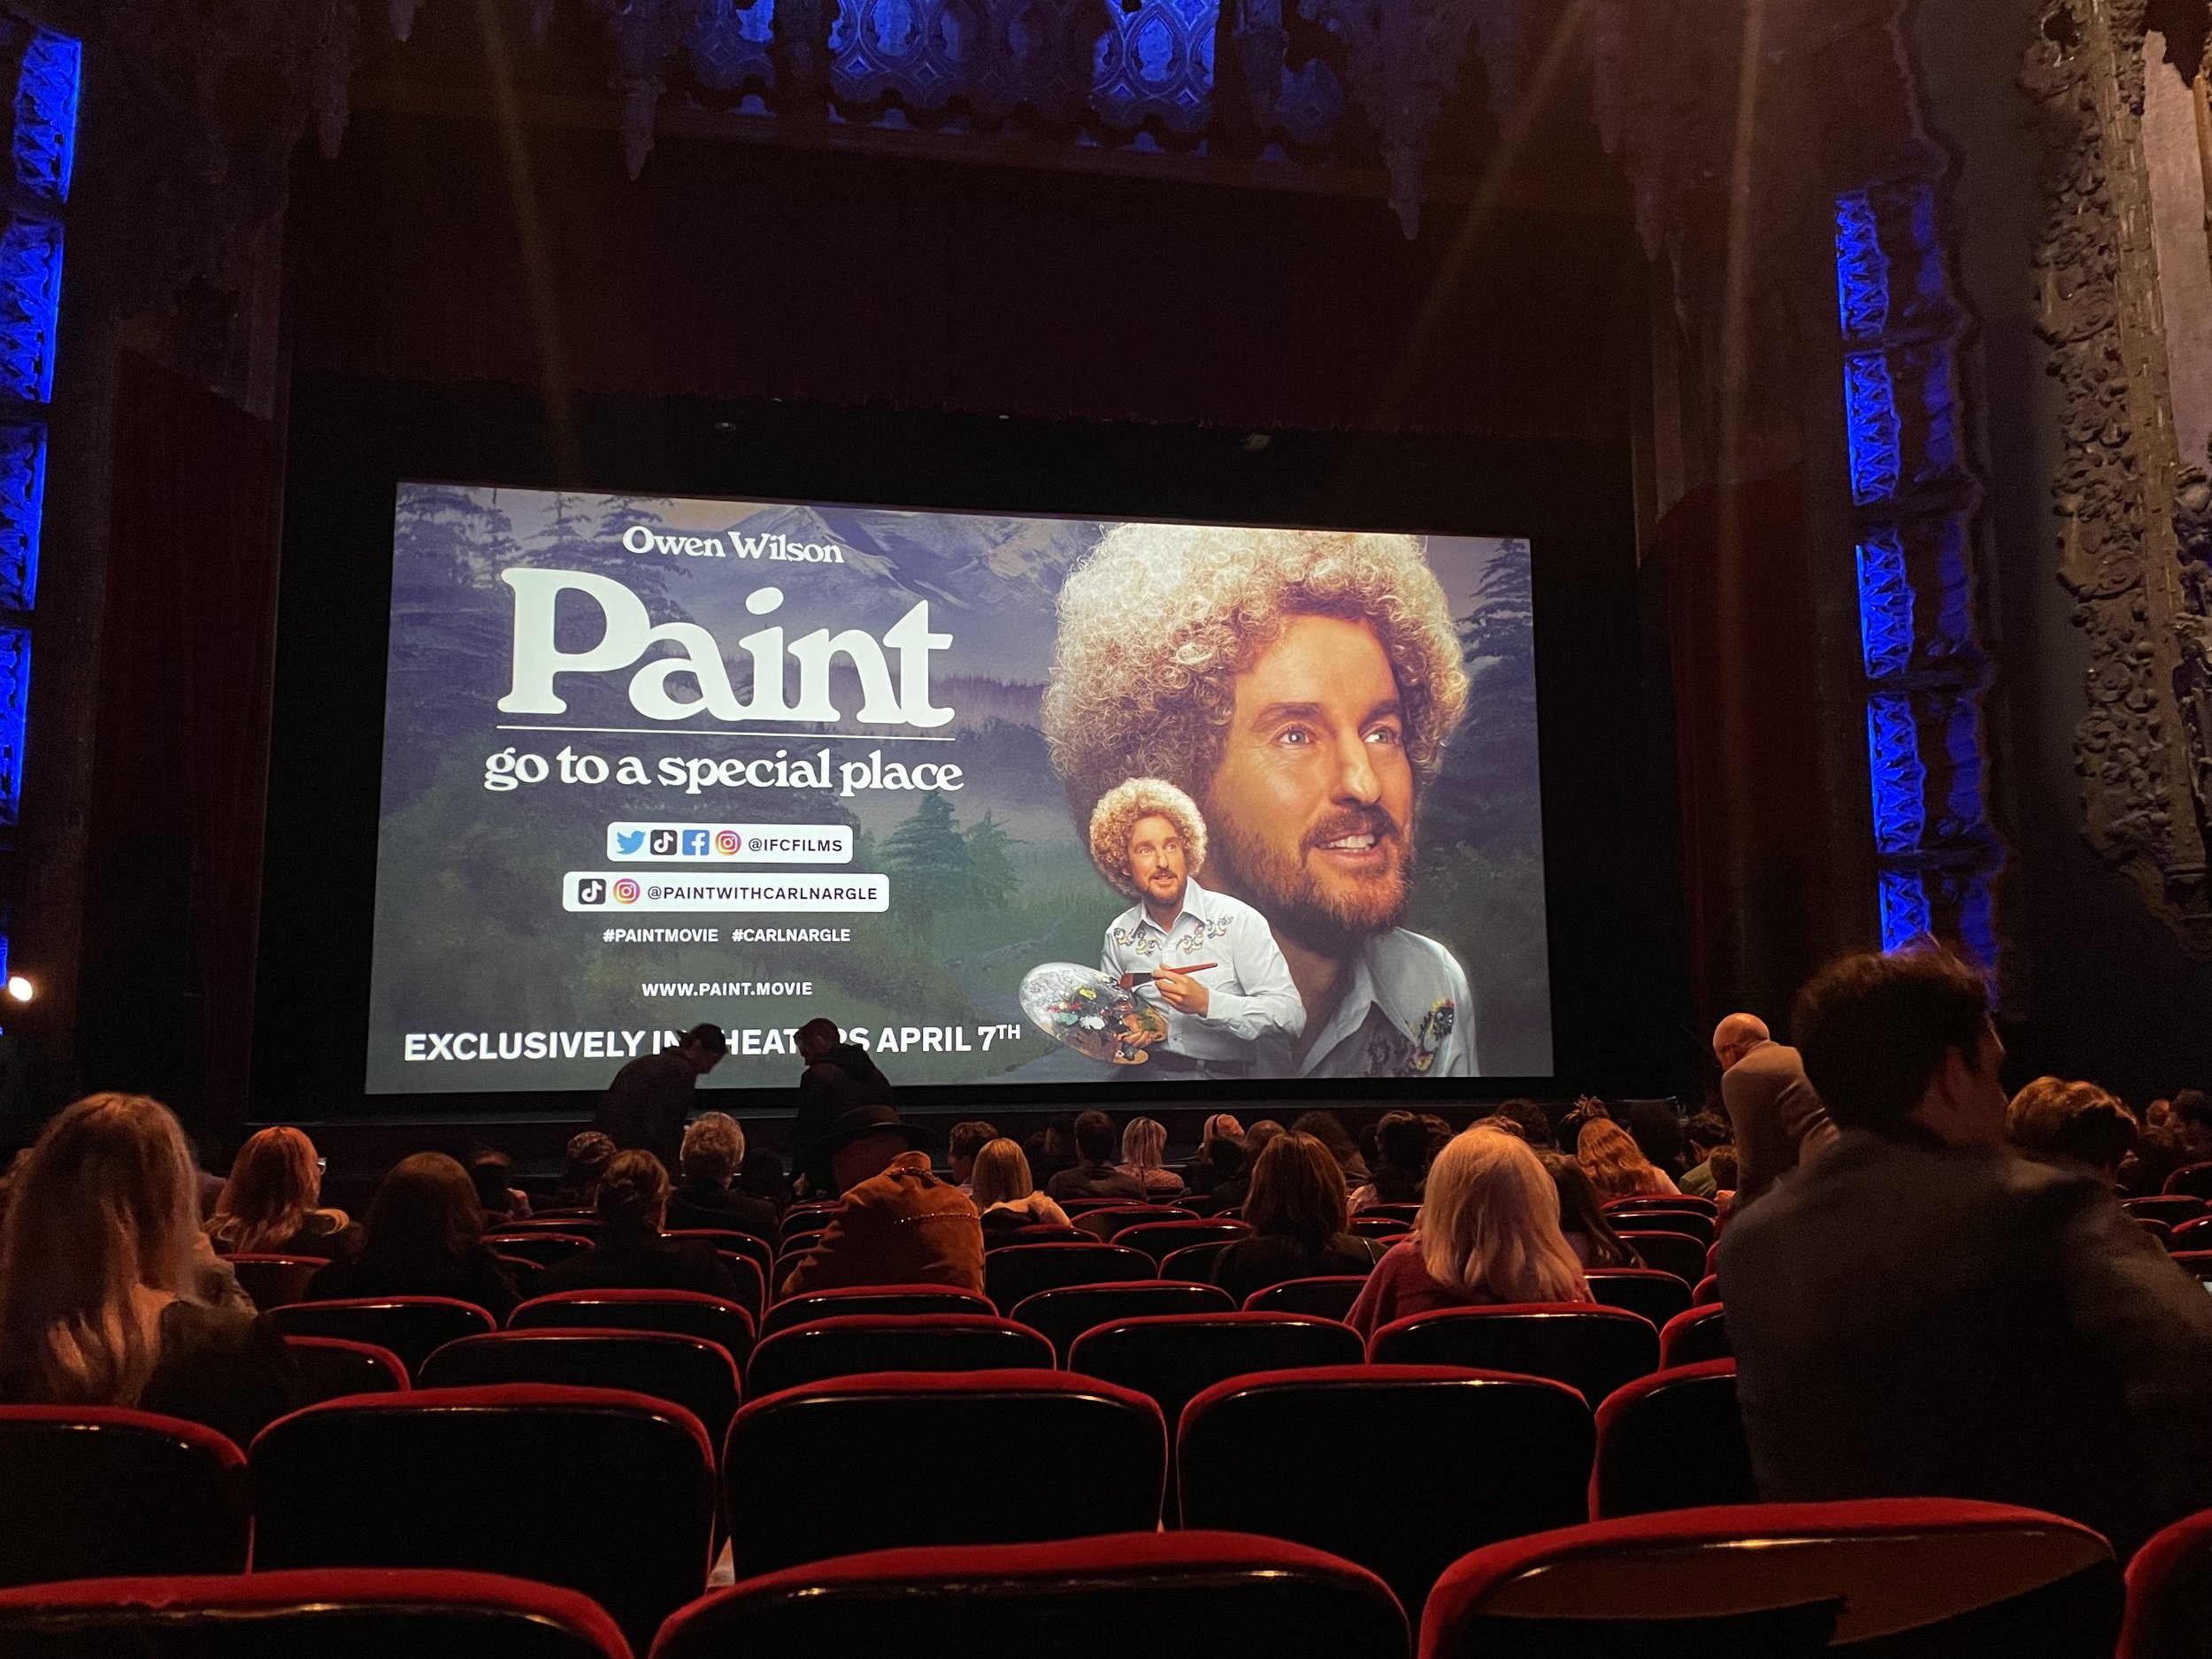 Ace theater_Paint premiere.jpg